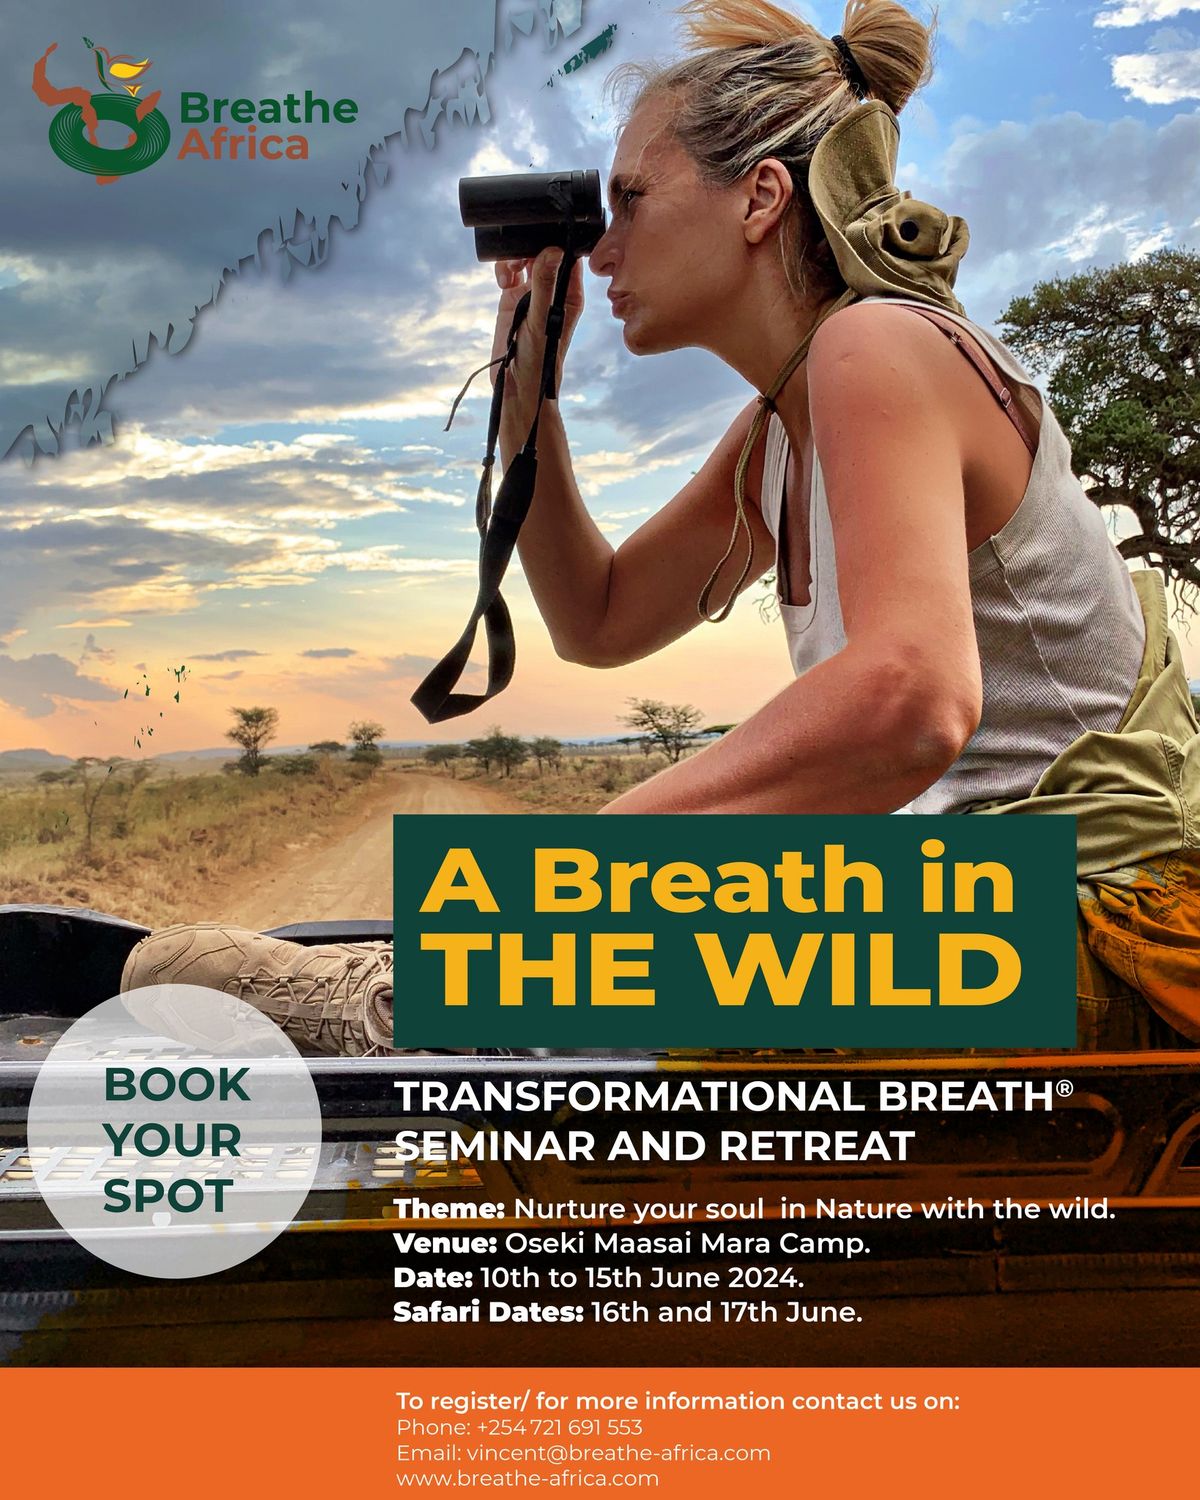 Transformational breath seminar